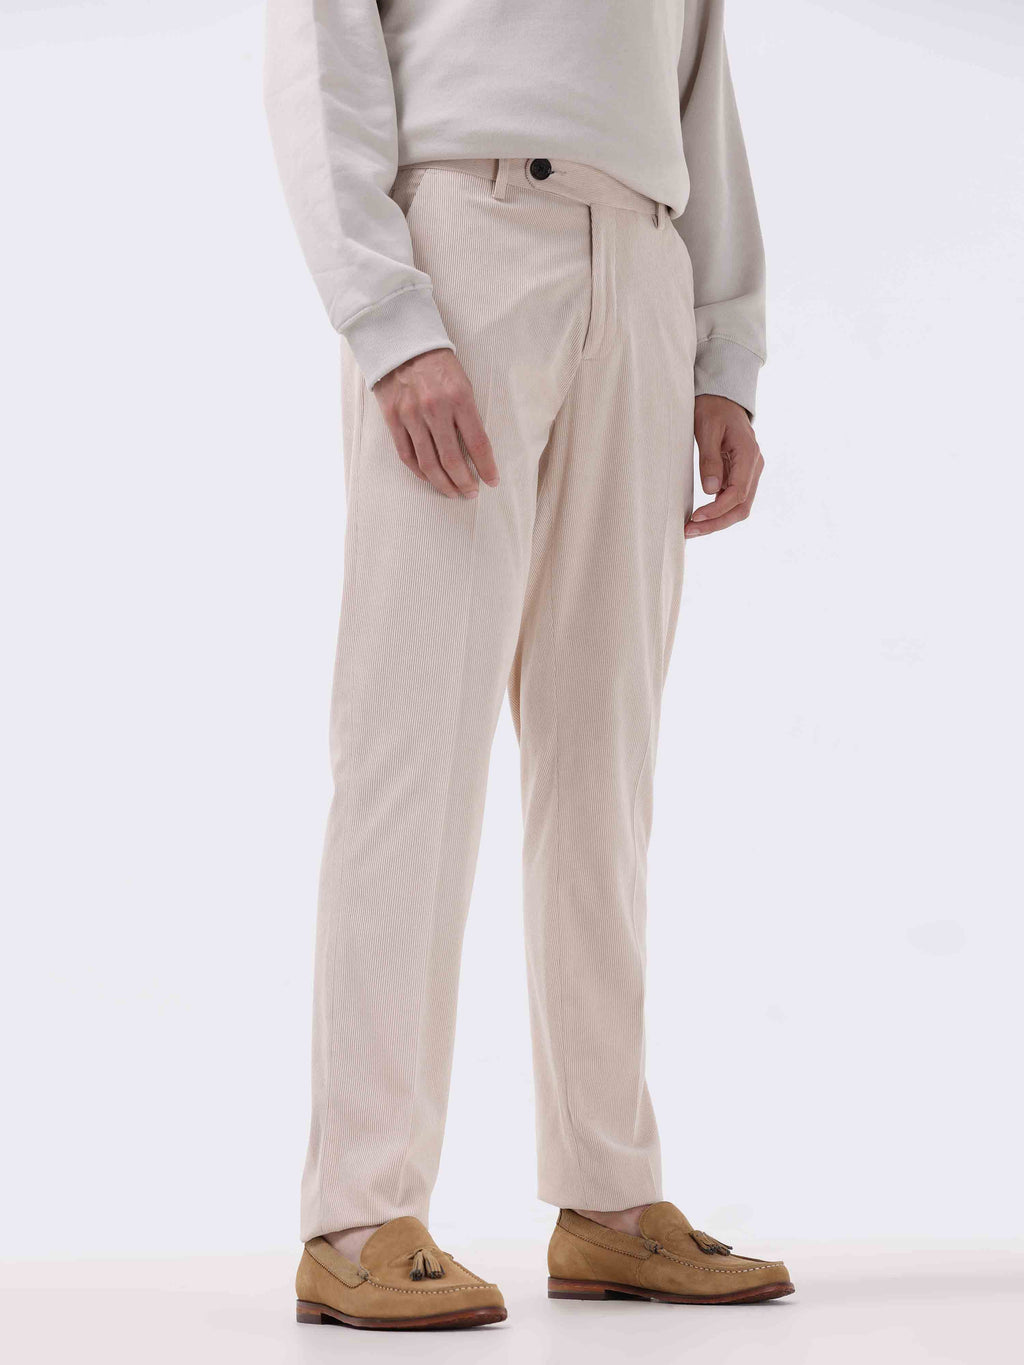 Mens Corduroy Pants - Buy Cream Colored Corduroy Pants